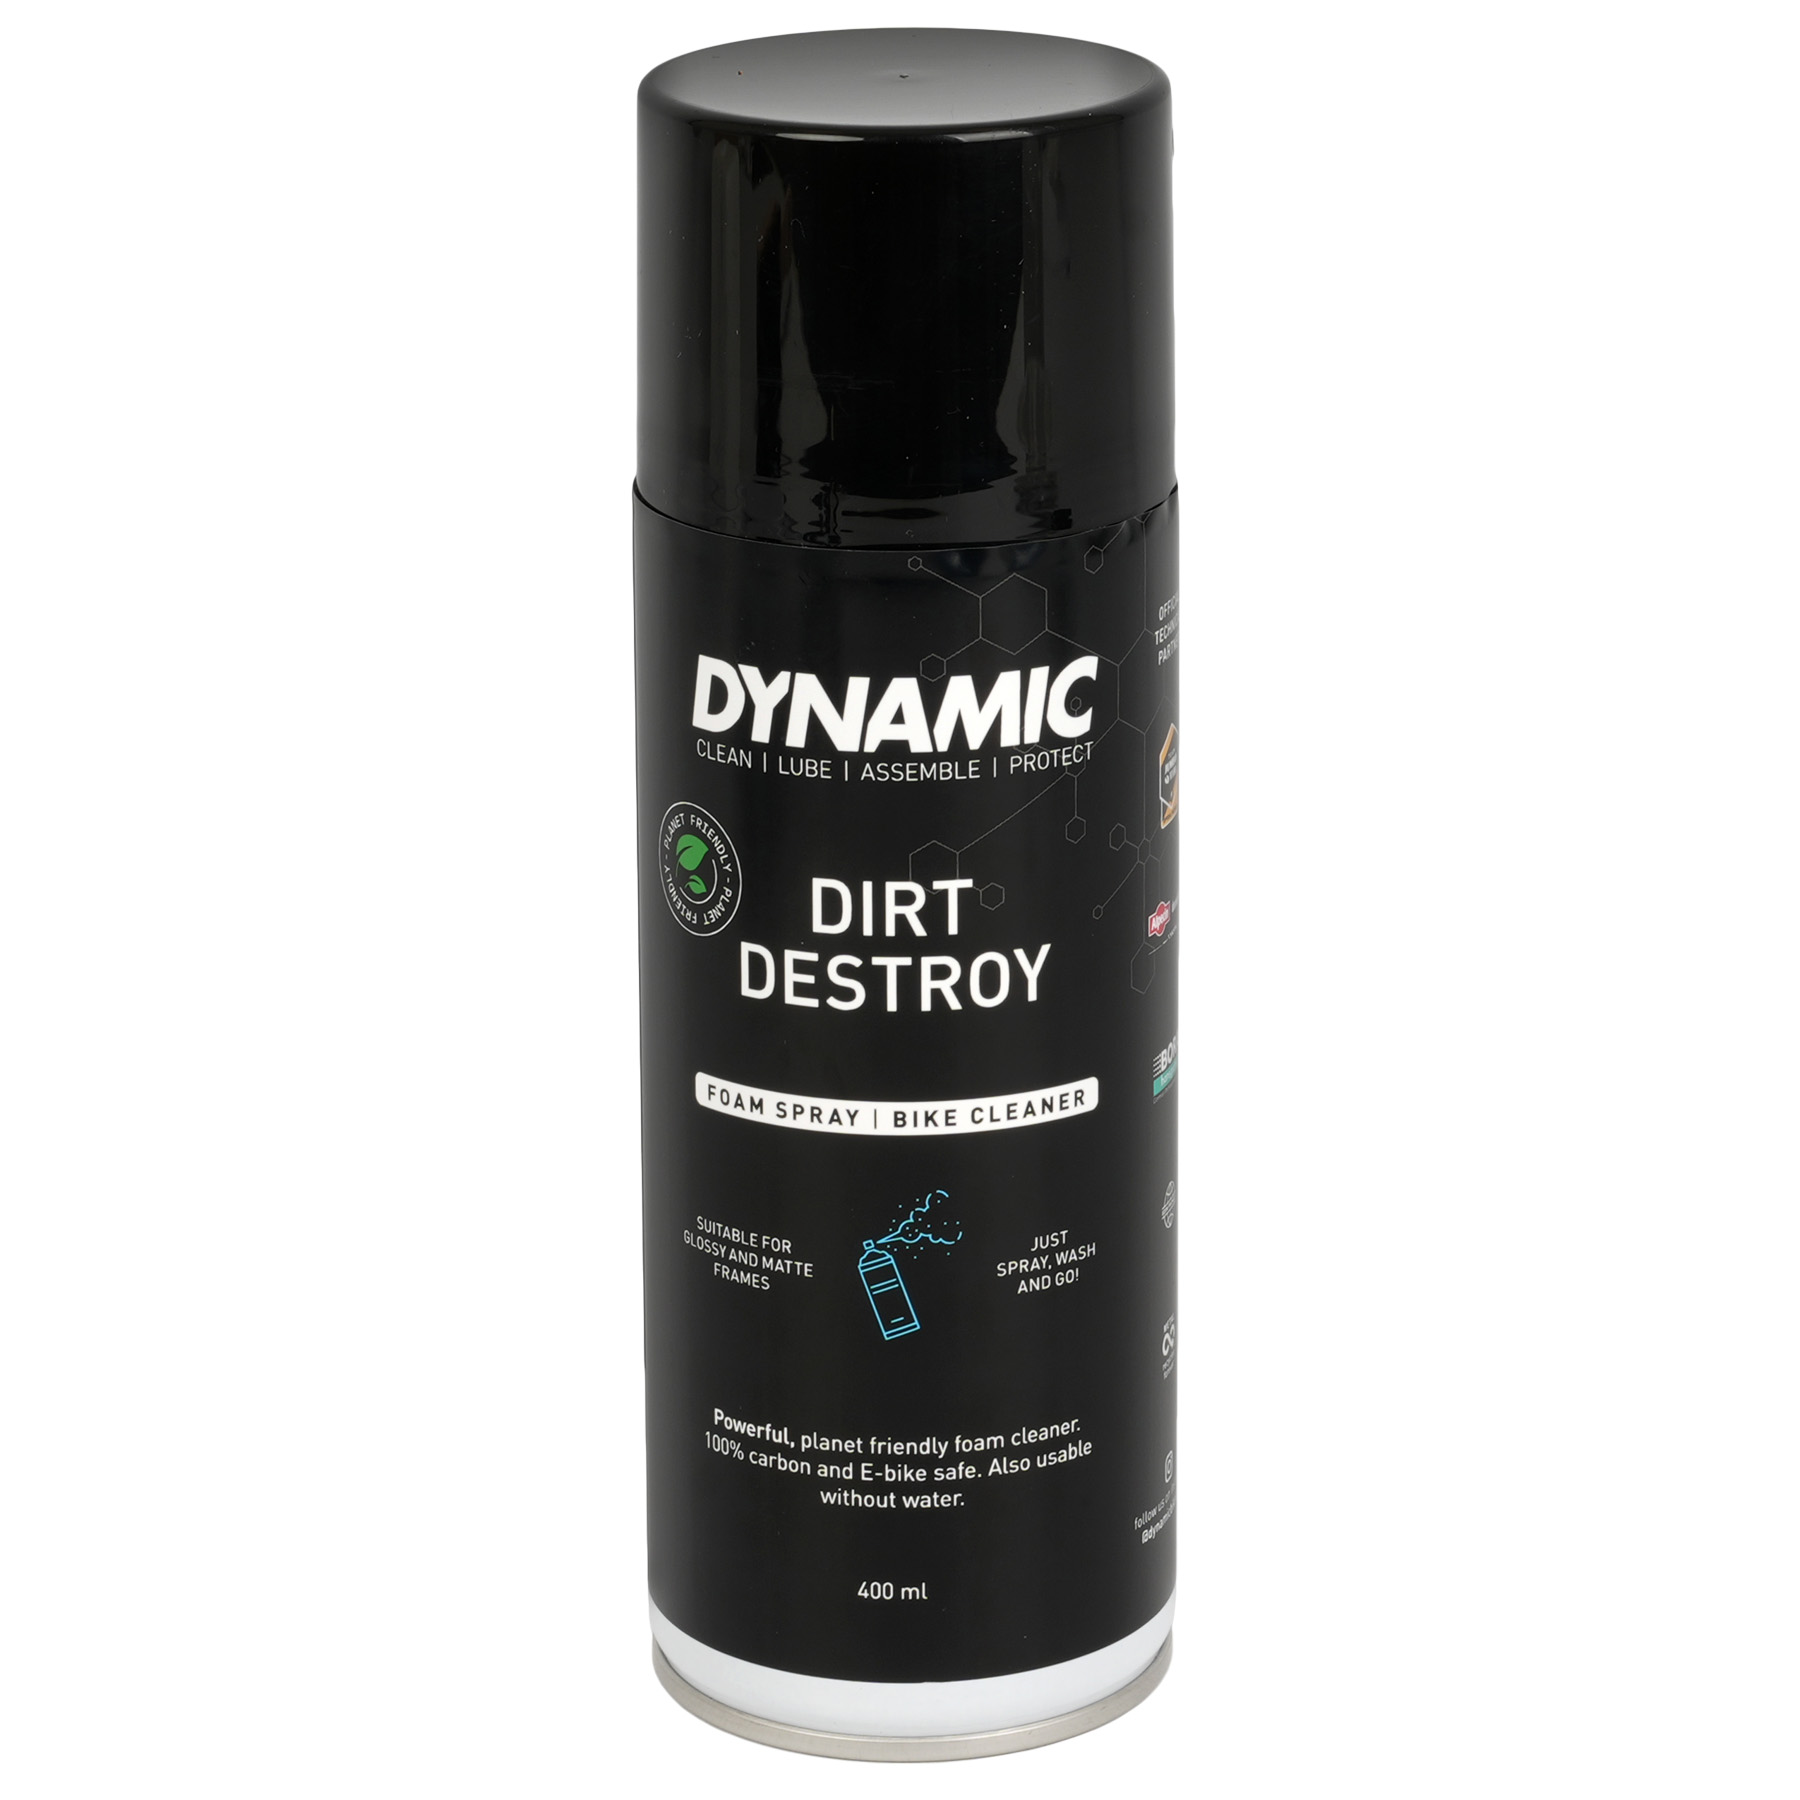 Productfoto van Dynamic Dirt Destroy Fietsreiniger - Schuimspray - 400ml